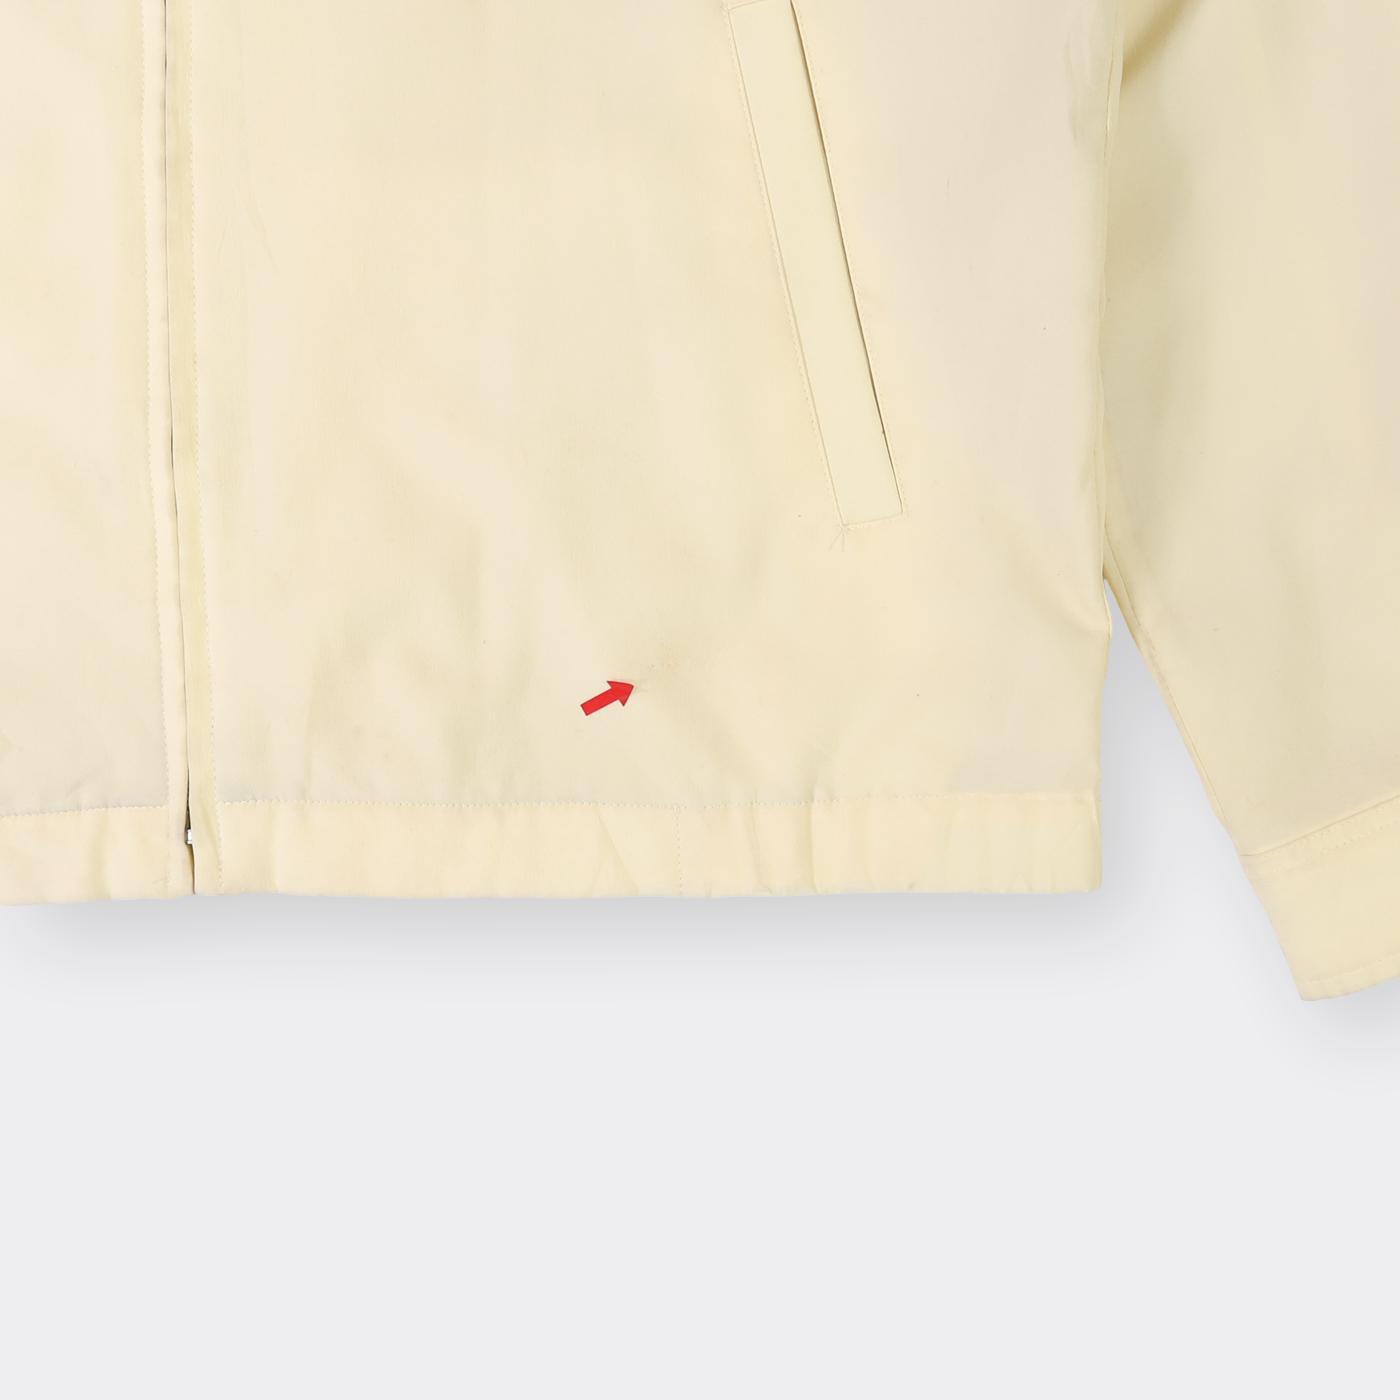 Yves Saint Laurent Vintage Jacket - Medium - Known Source